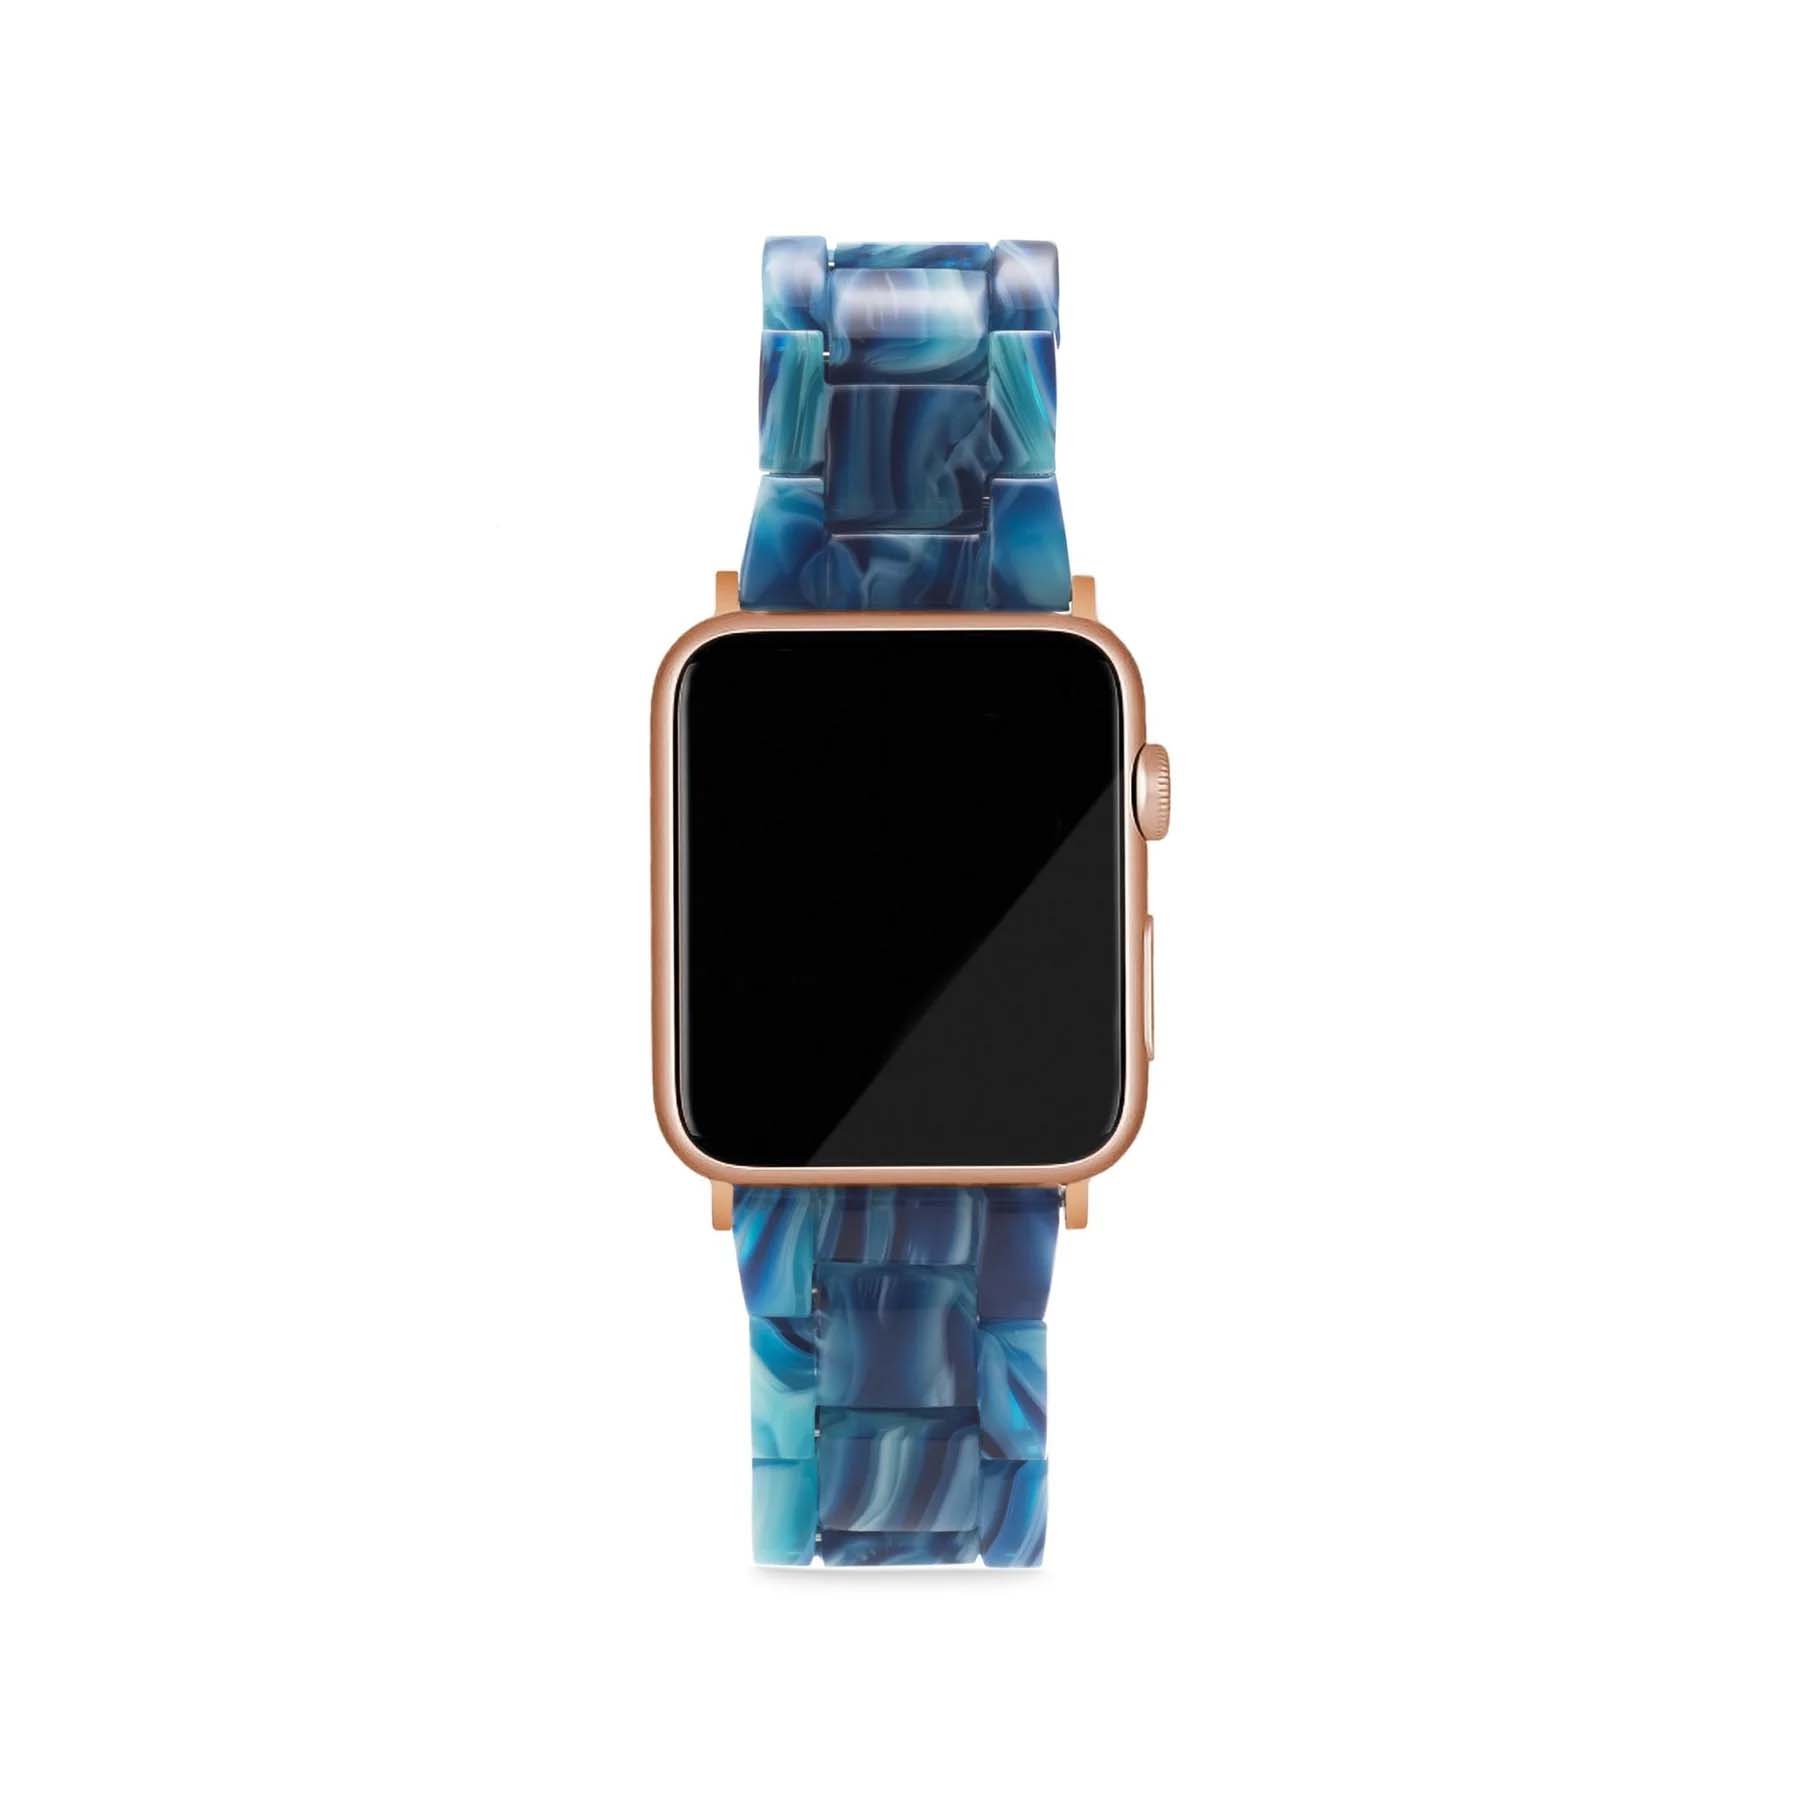 Machete Apple Watch Band strap in Capri